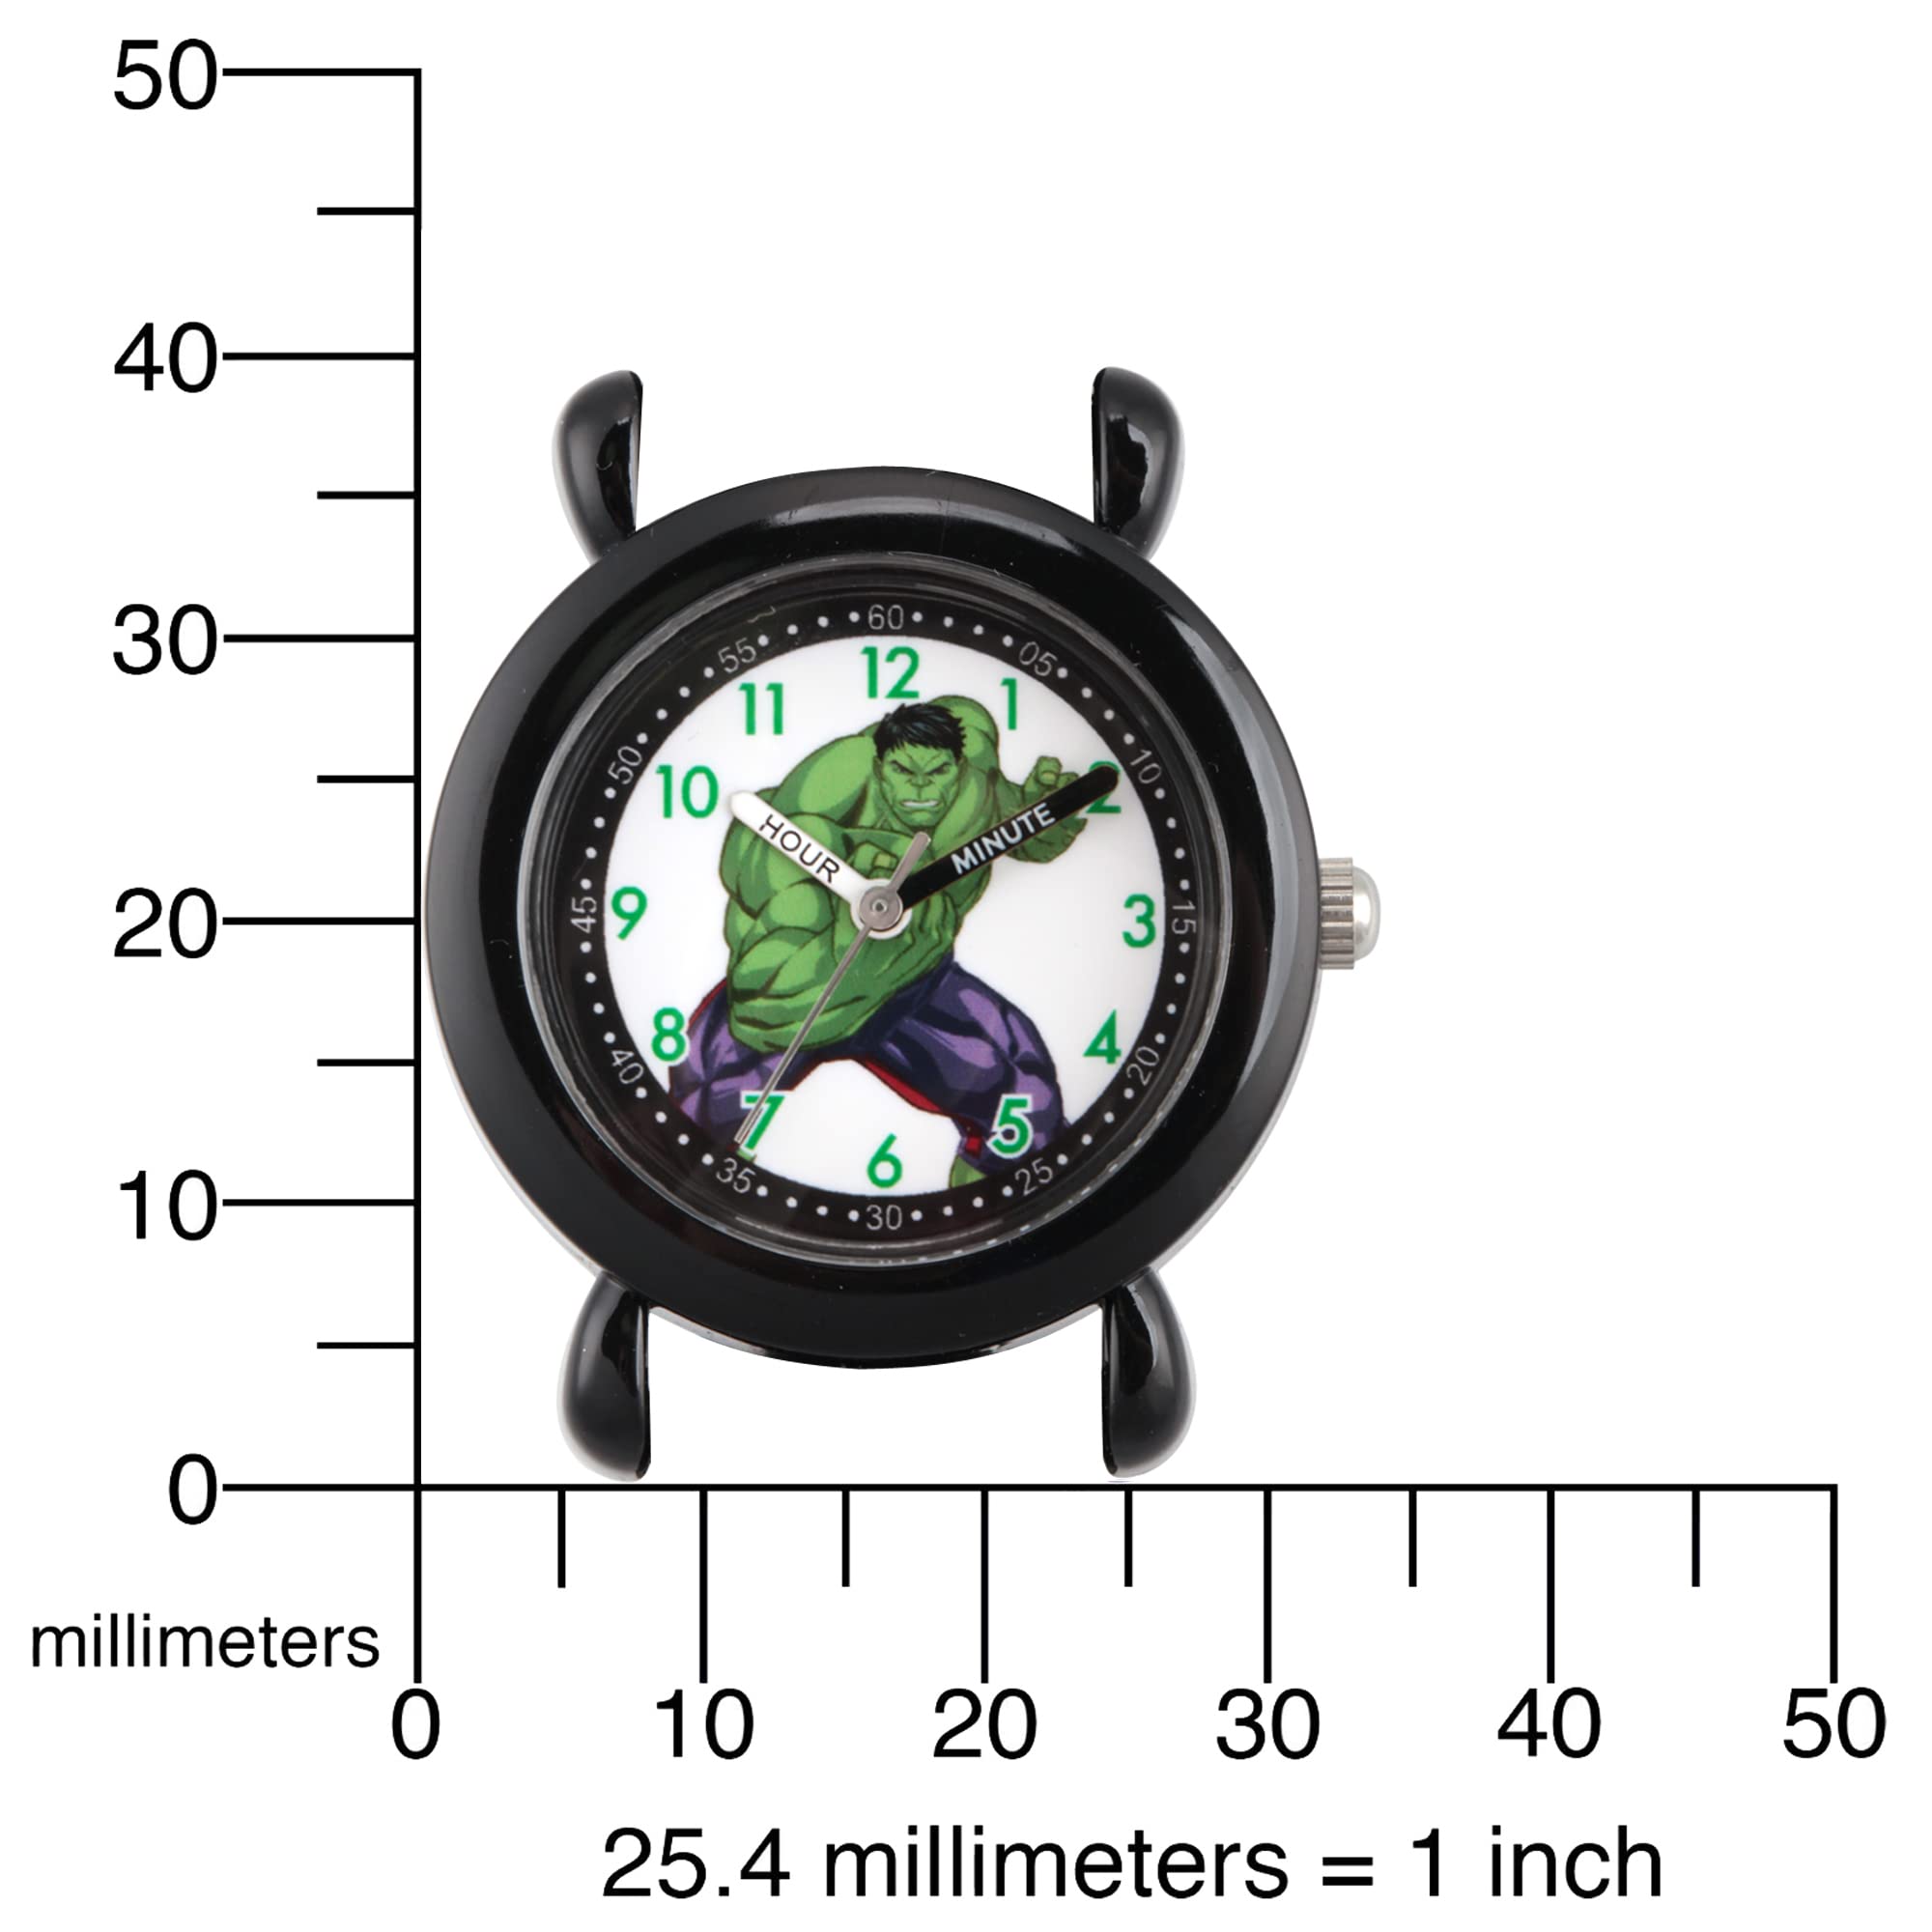 Marvel Kids' Plastic Time Teacher Analog Quartz Silicone Strap Watch